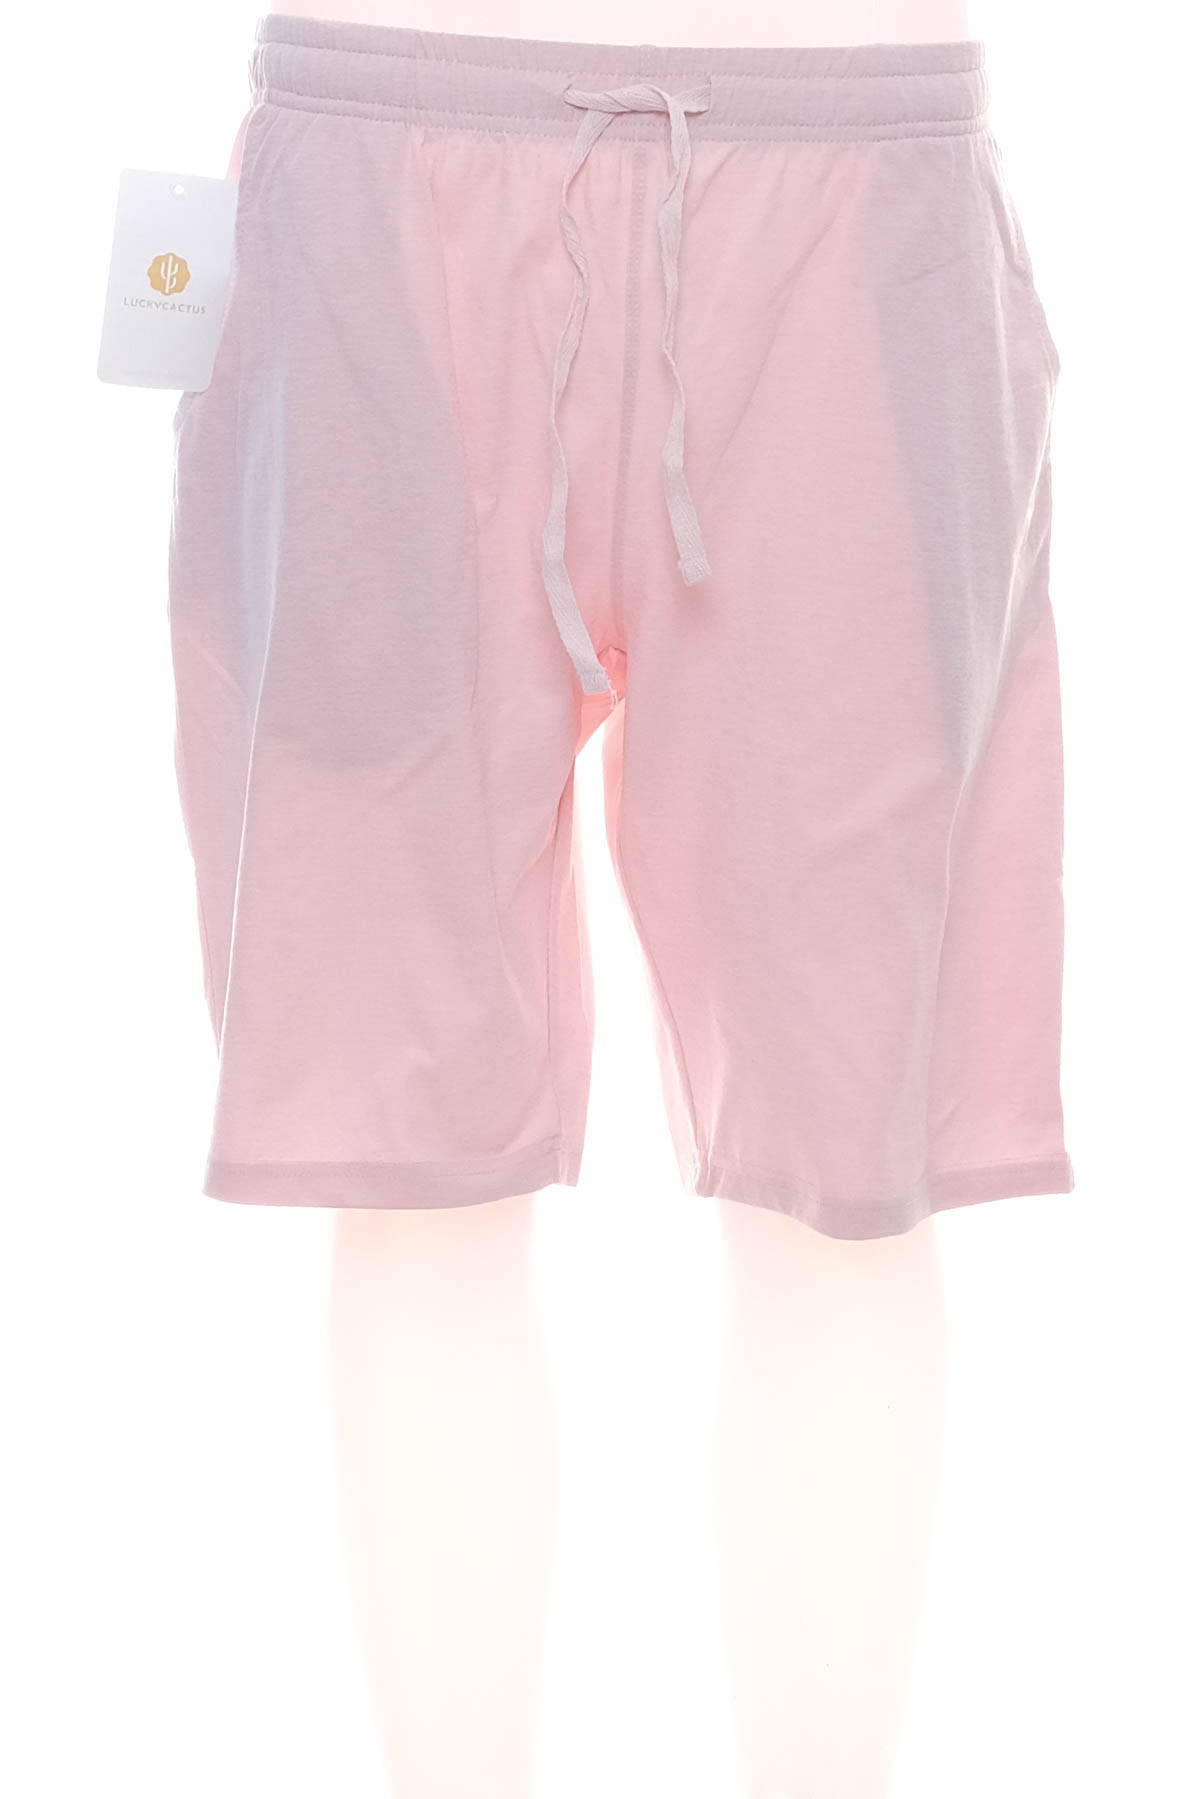 Men's shorts - LUCKYCACTUS - 0